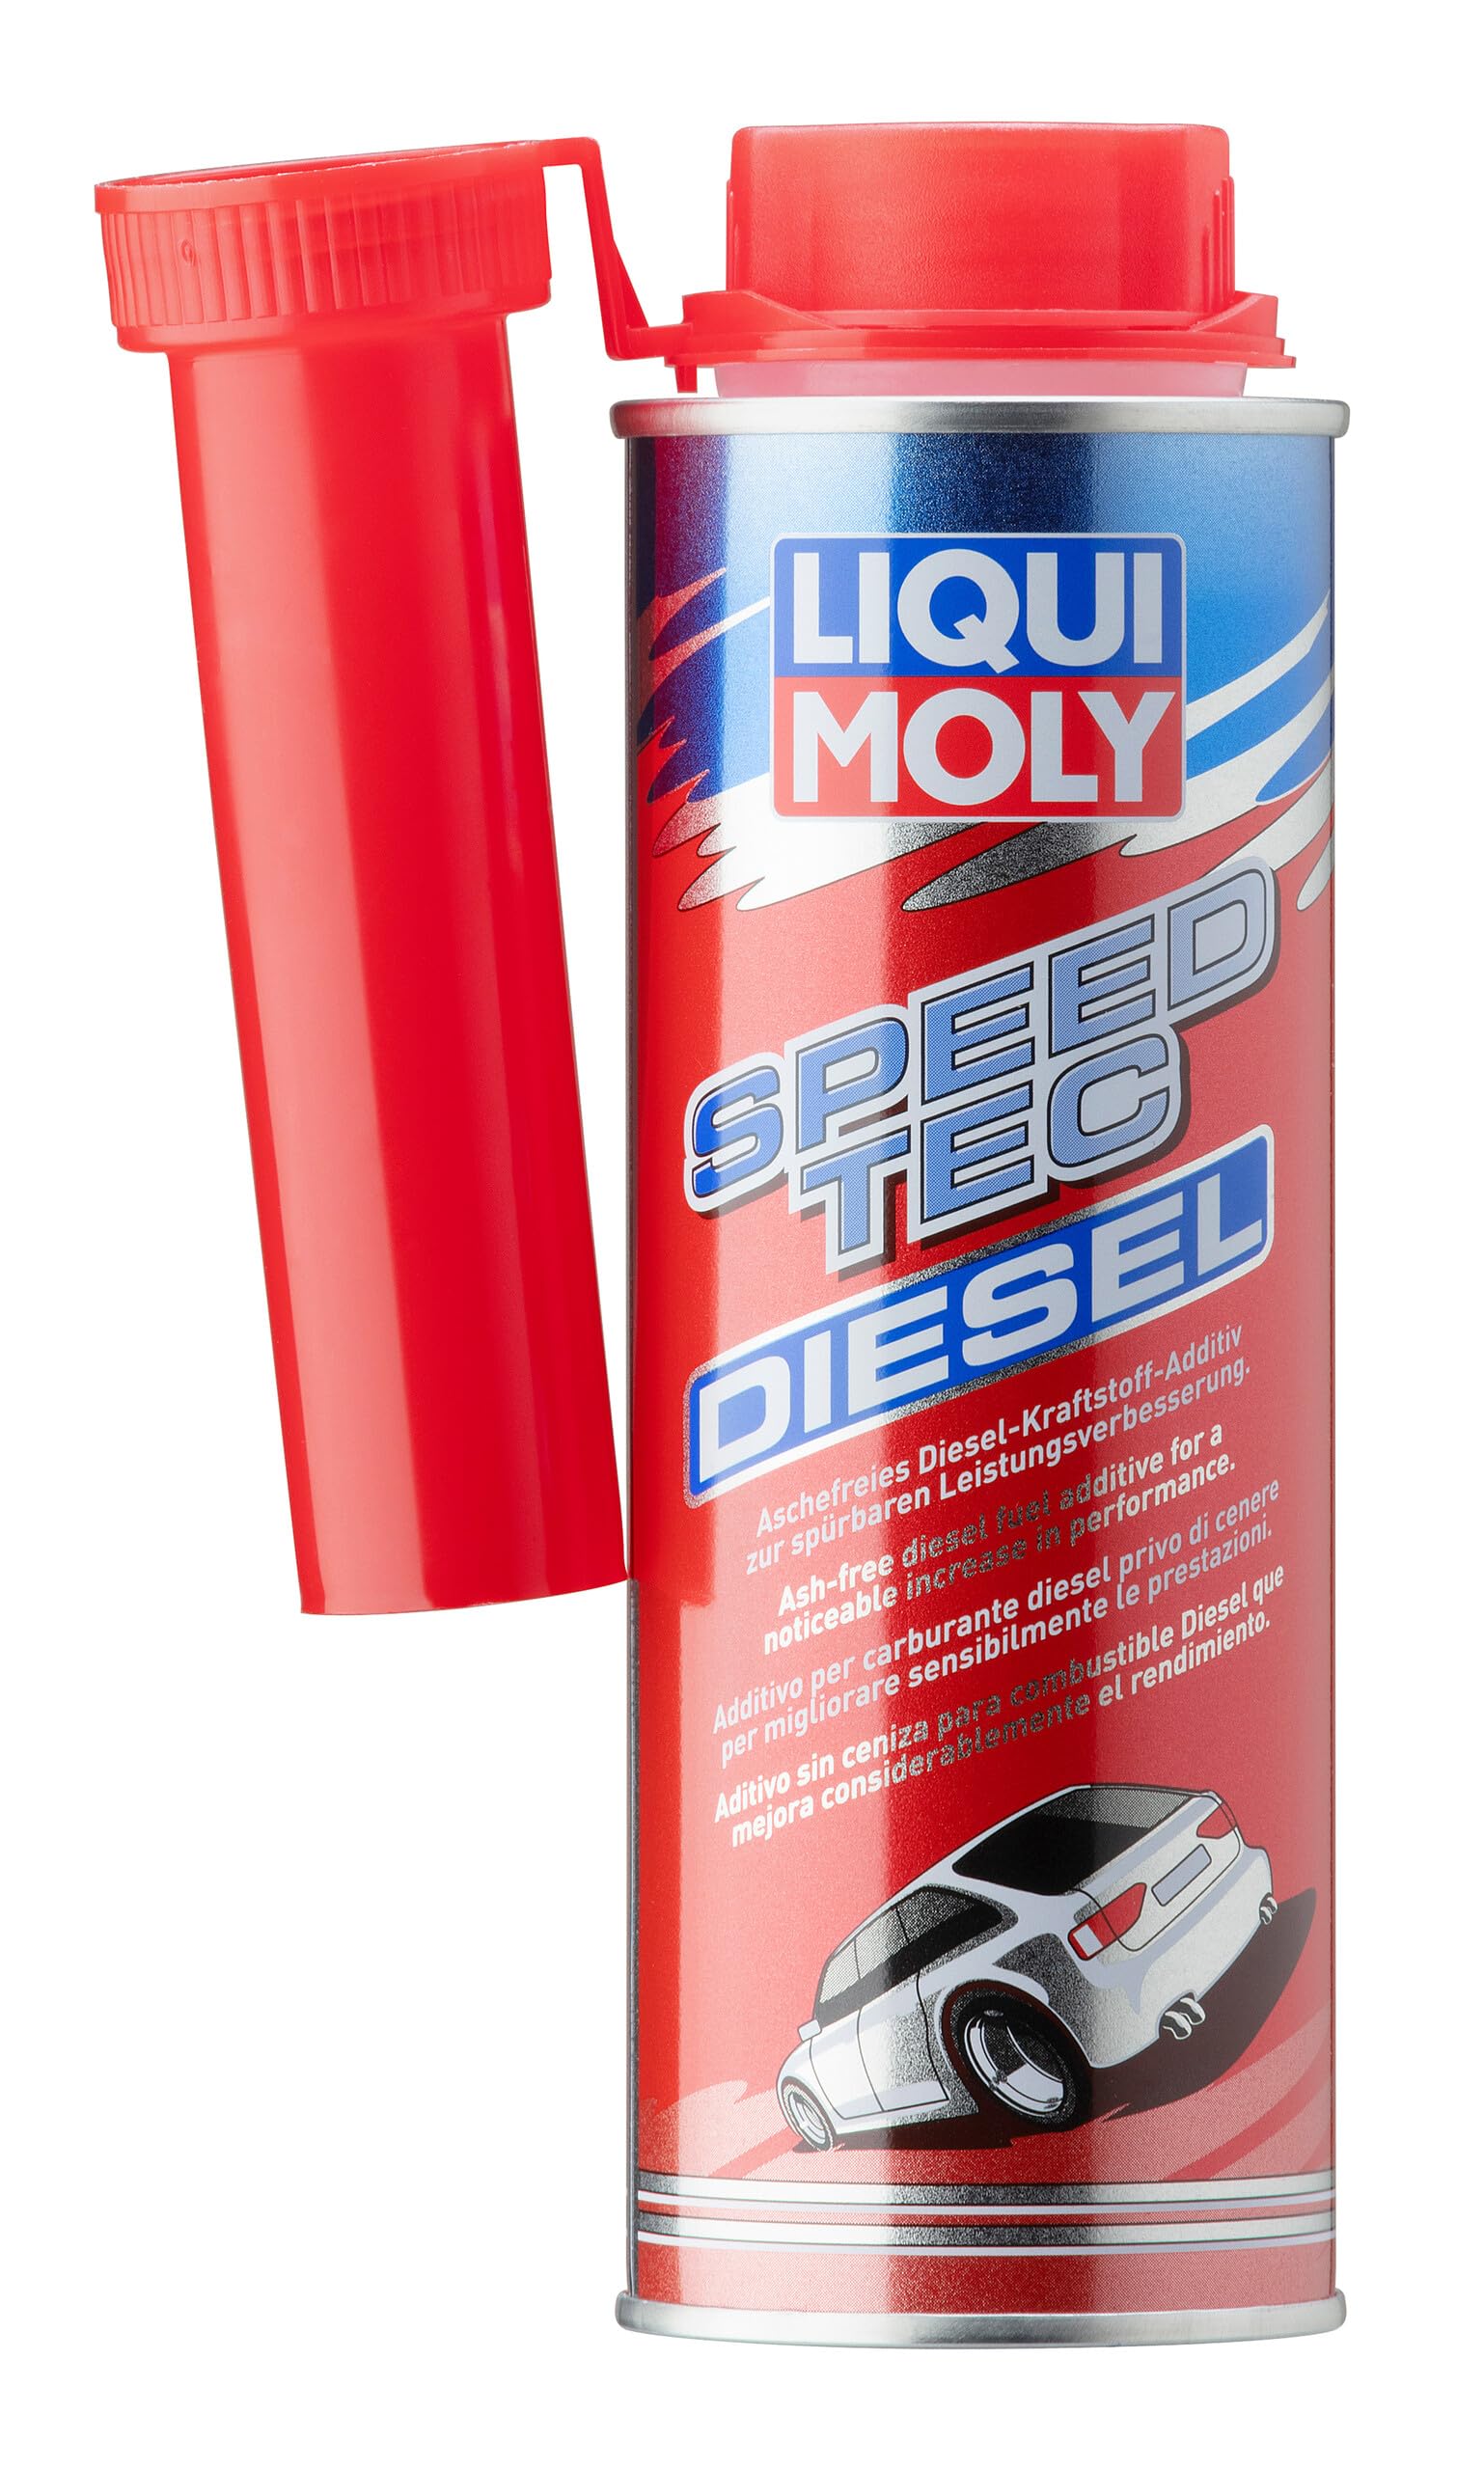 LIQUI MOLY Speed Tec Diesel | 250 ml | Dieseladditiv | Art.-Nr.: 3722 von Liqui Moly